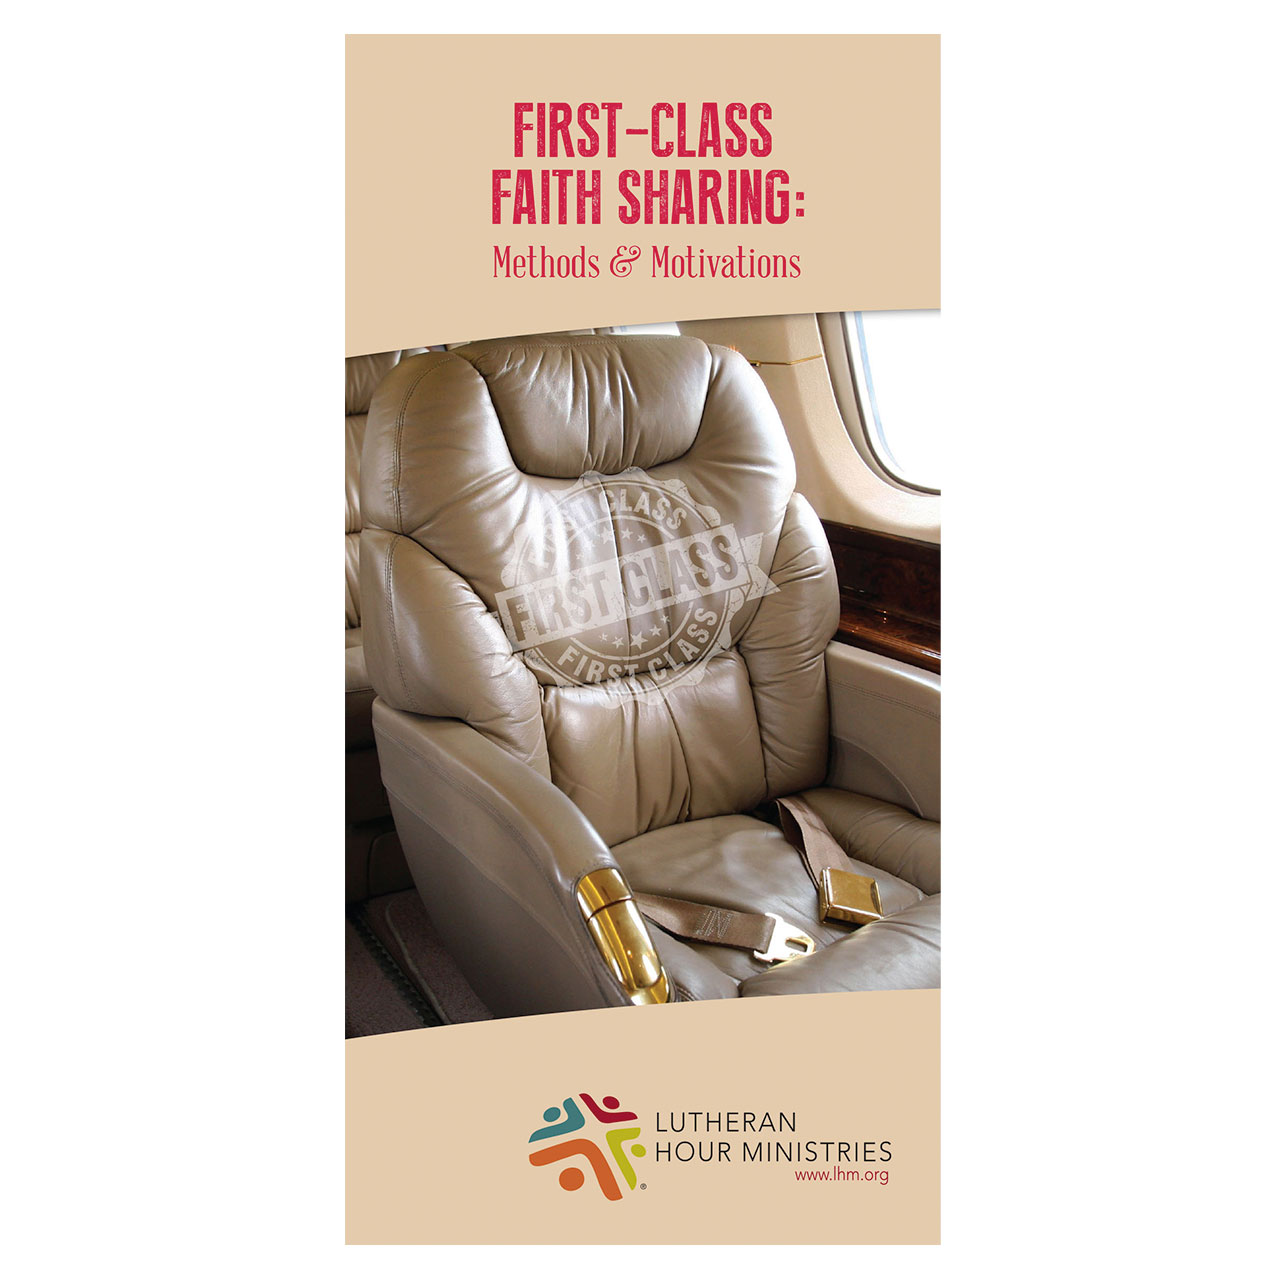 First-Class Faith Sharing: Methods & Motivations